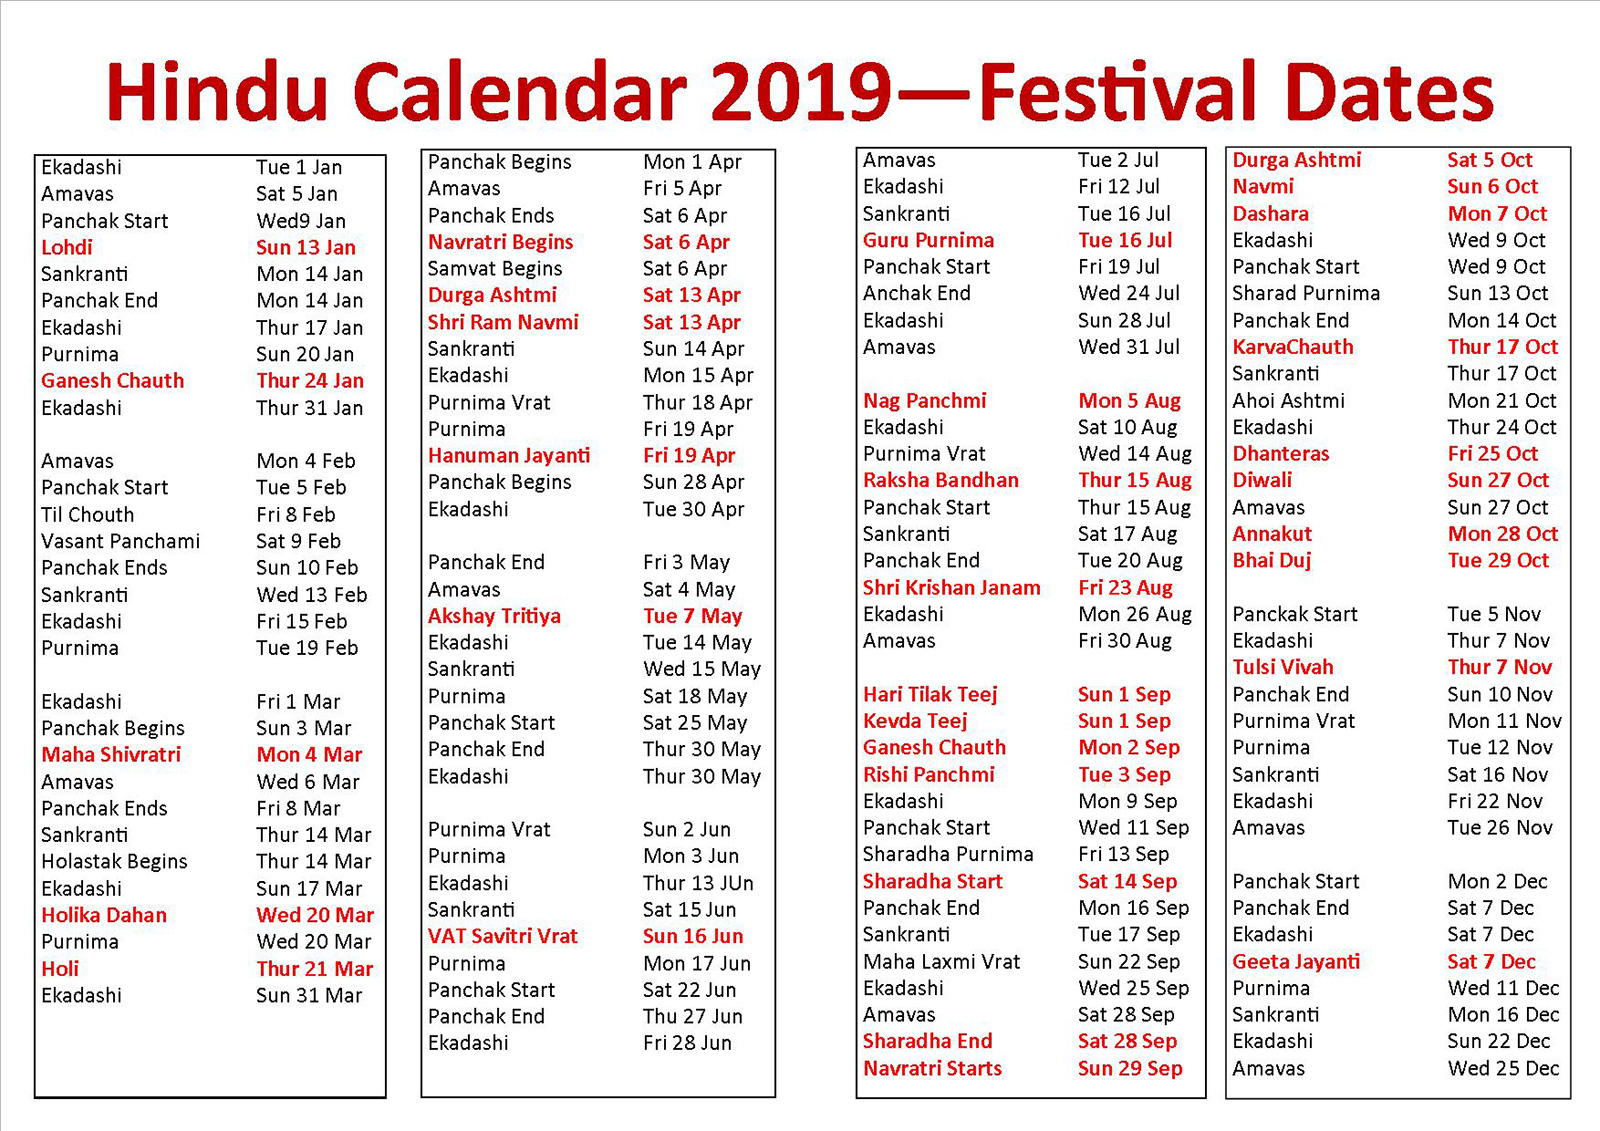 LIST OF HINDU FESTIVALS 2019 - Medway Hindu Mandir Cultural & Community Centre of Kent